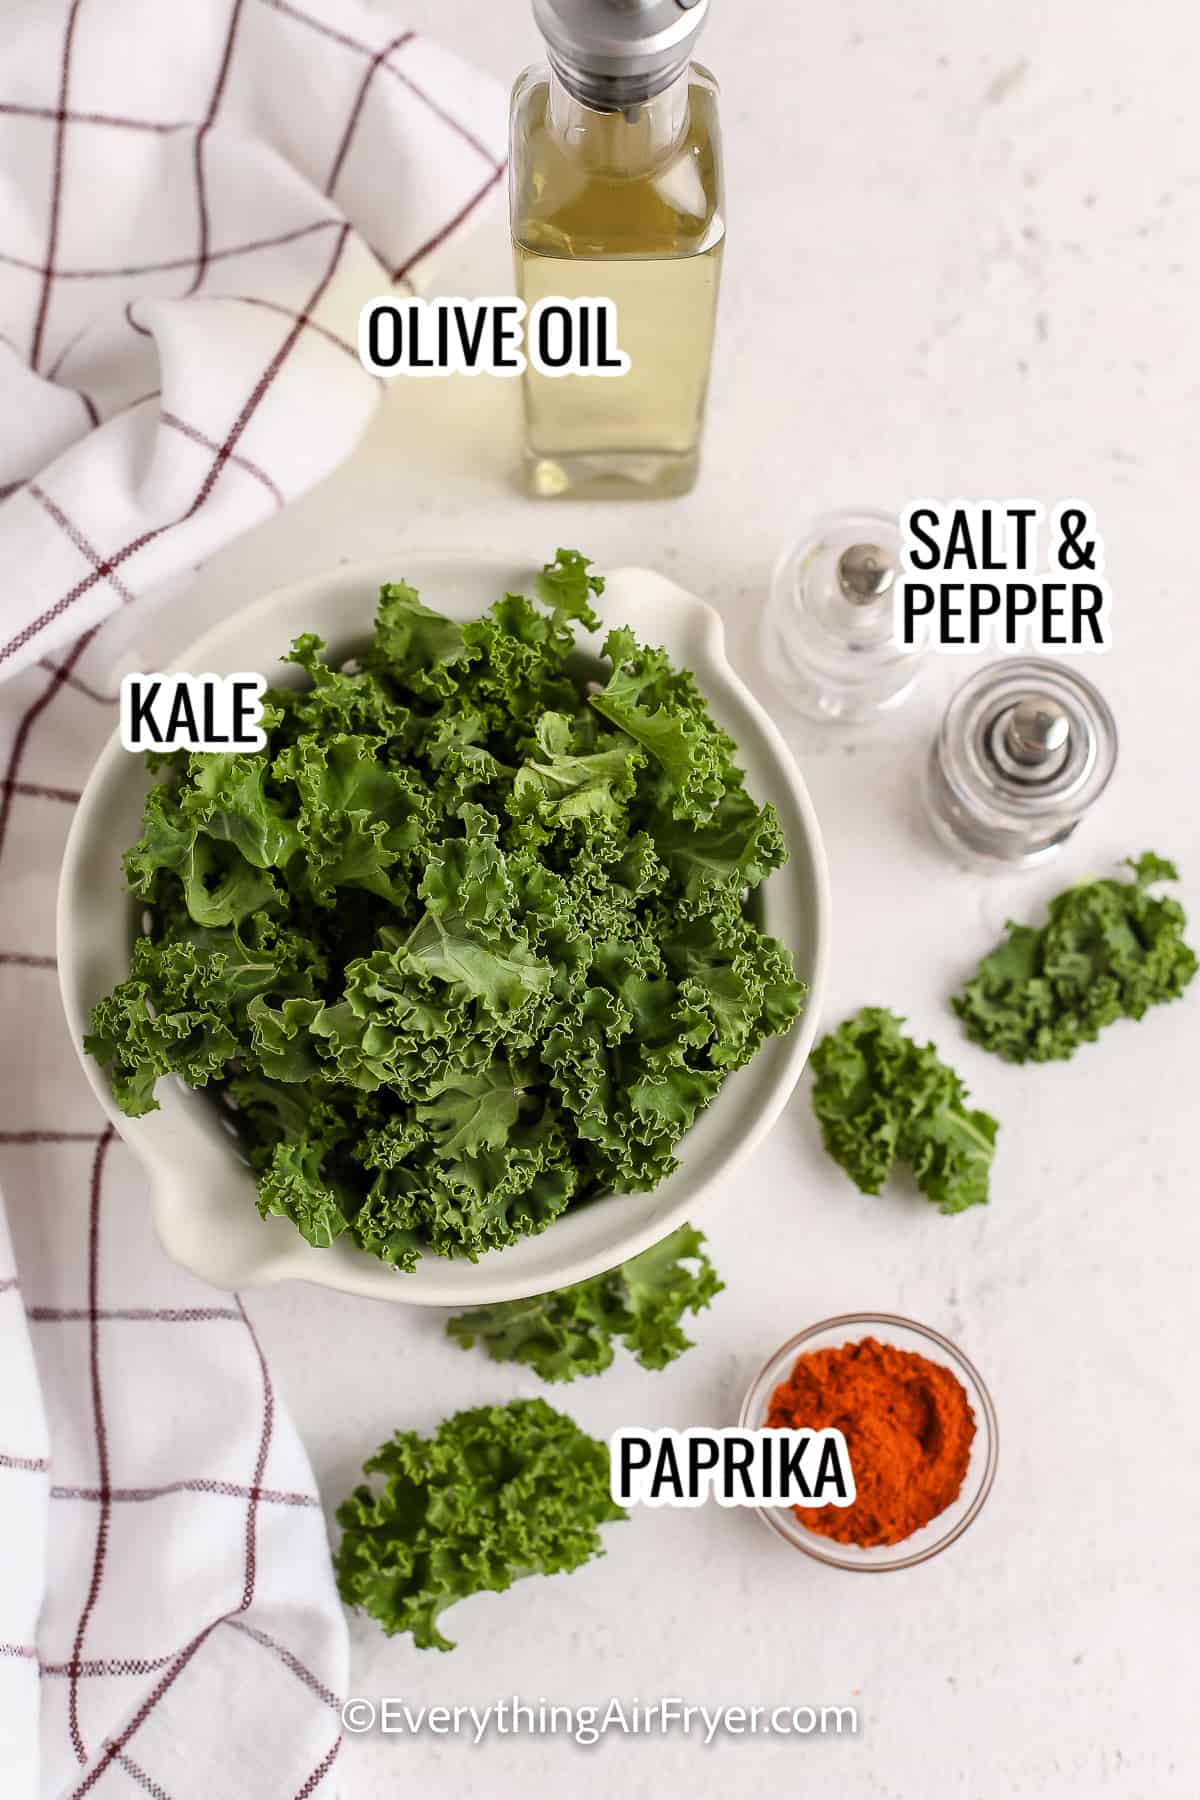 ingredients assembled to make air fryer kale chips, including kale, olive oil, paprika, and salt and pepper